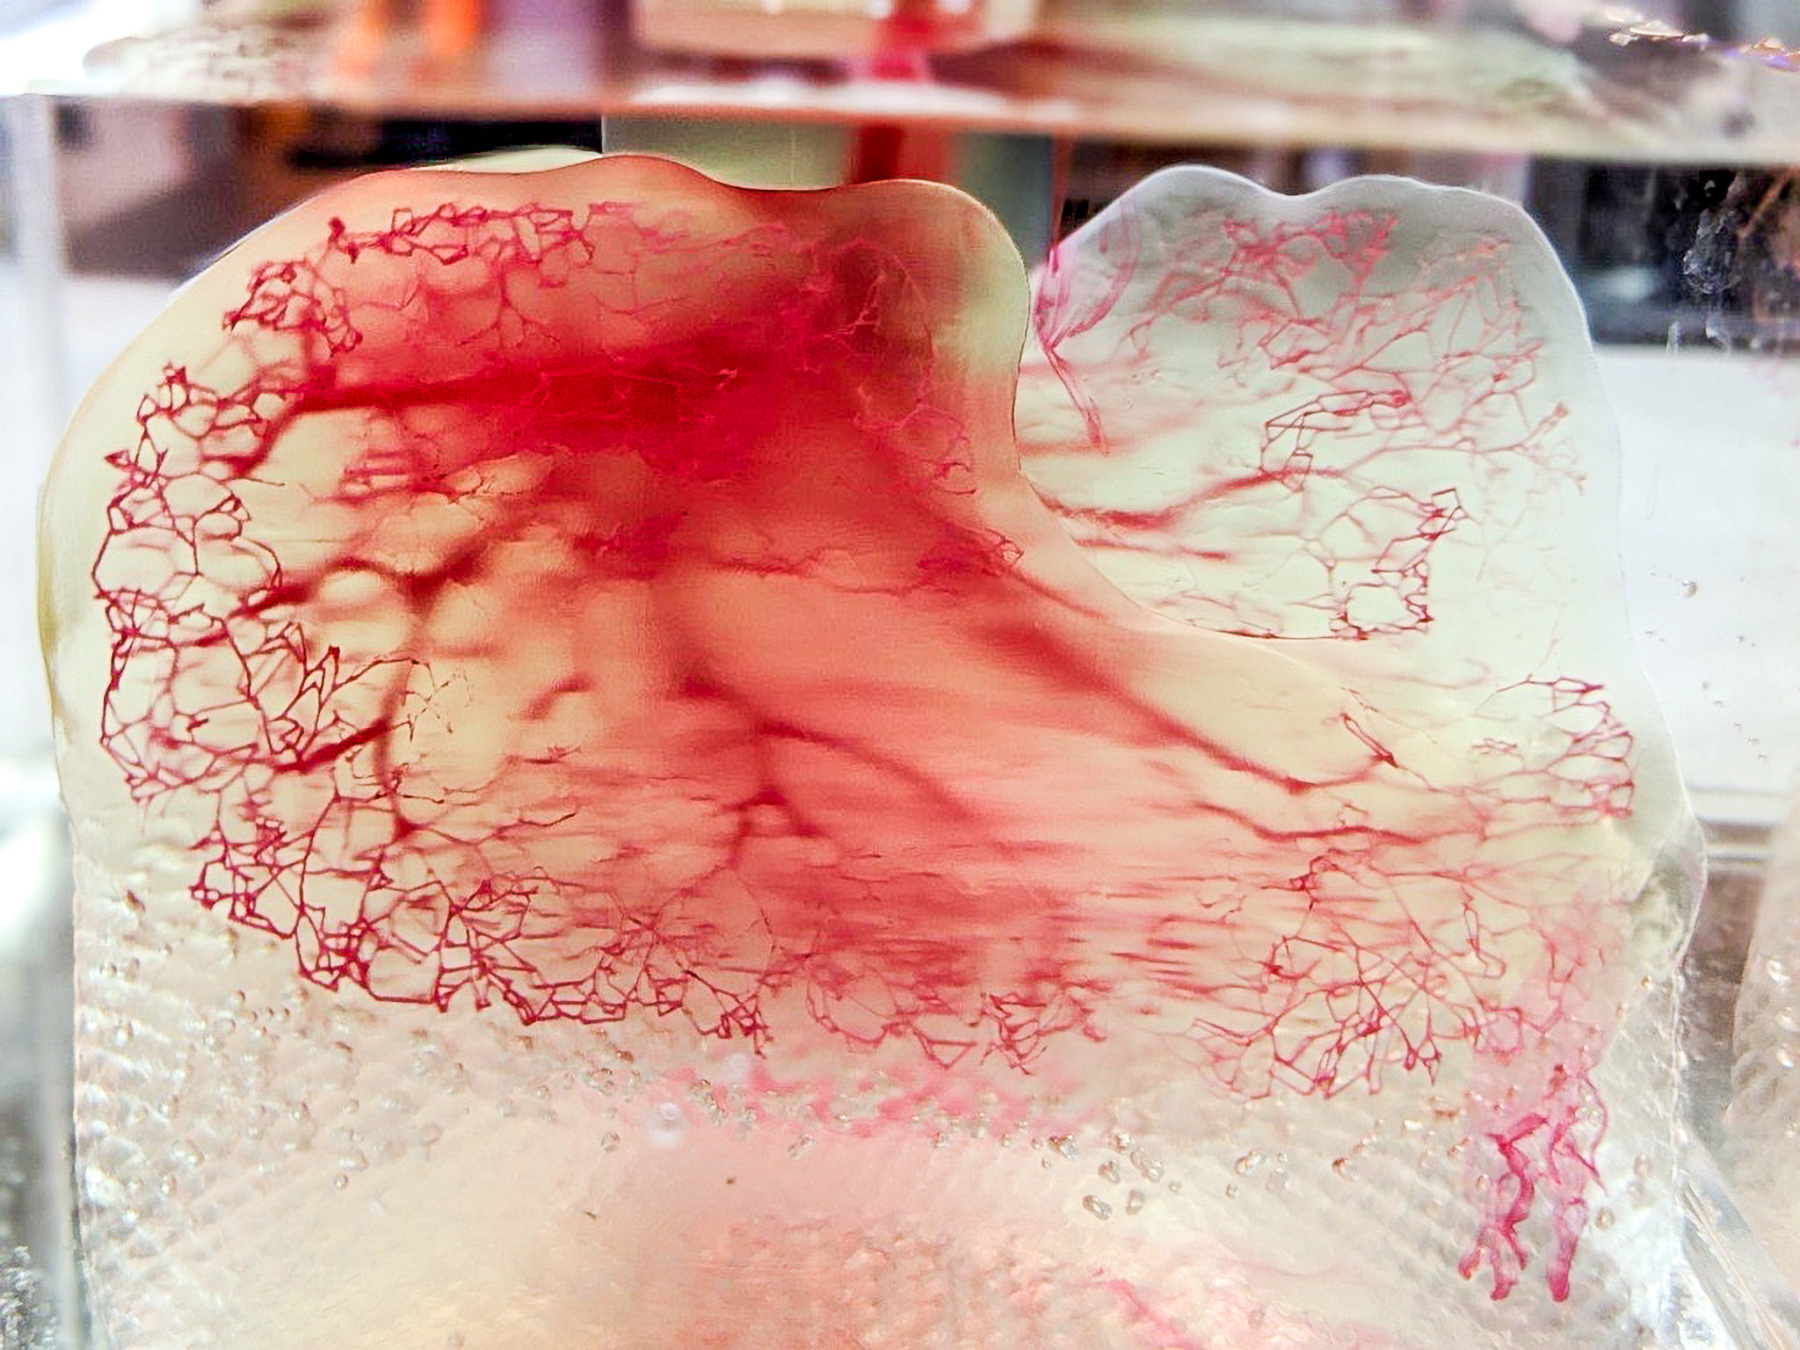 Human vasculature model created using Print to Perfusion process" Image via United Therapeutics